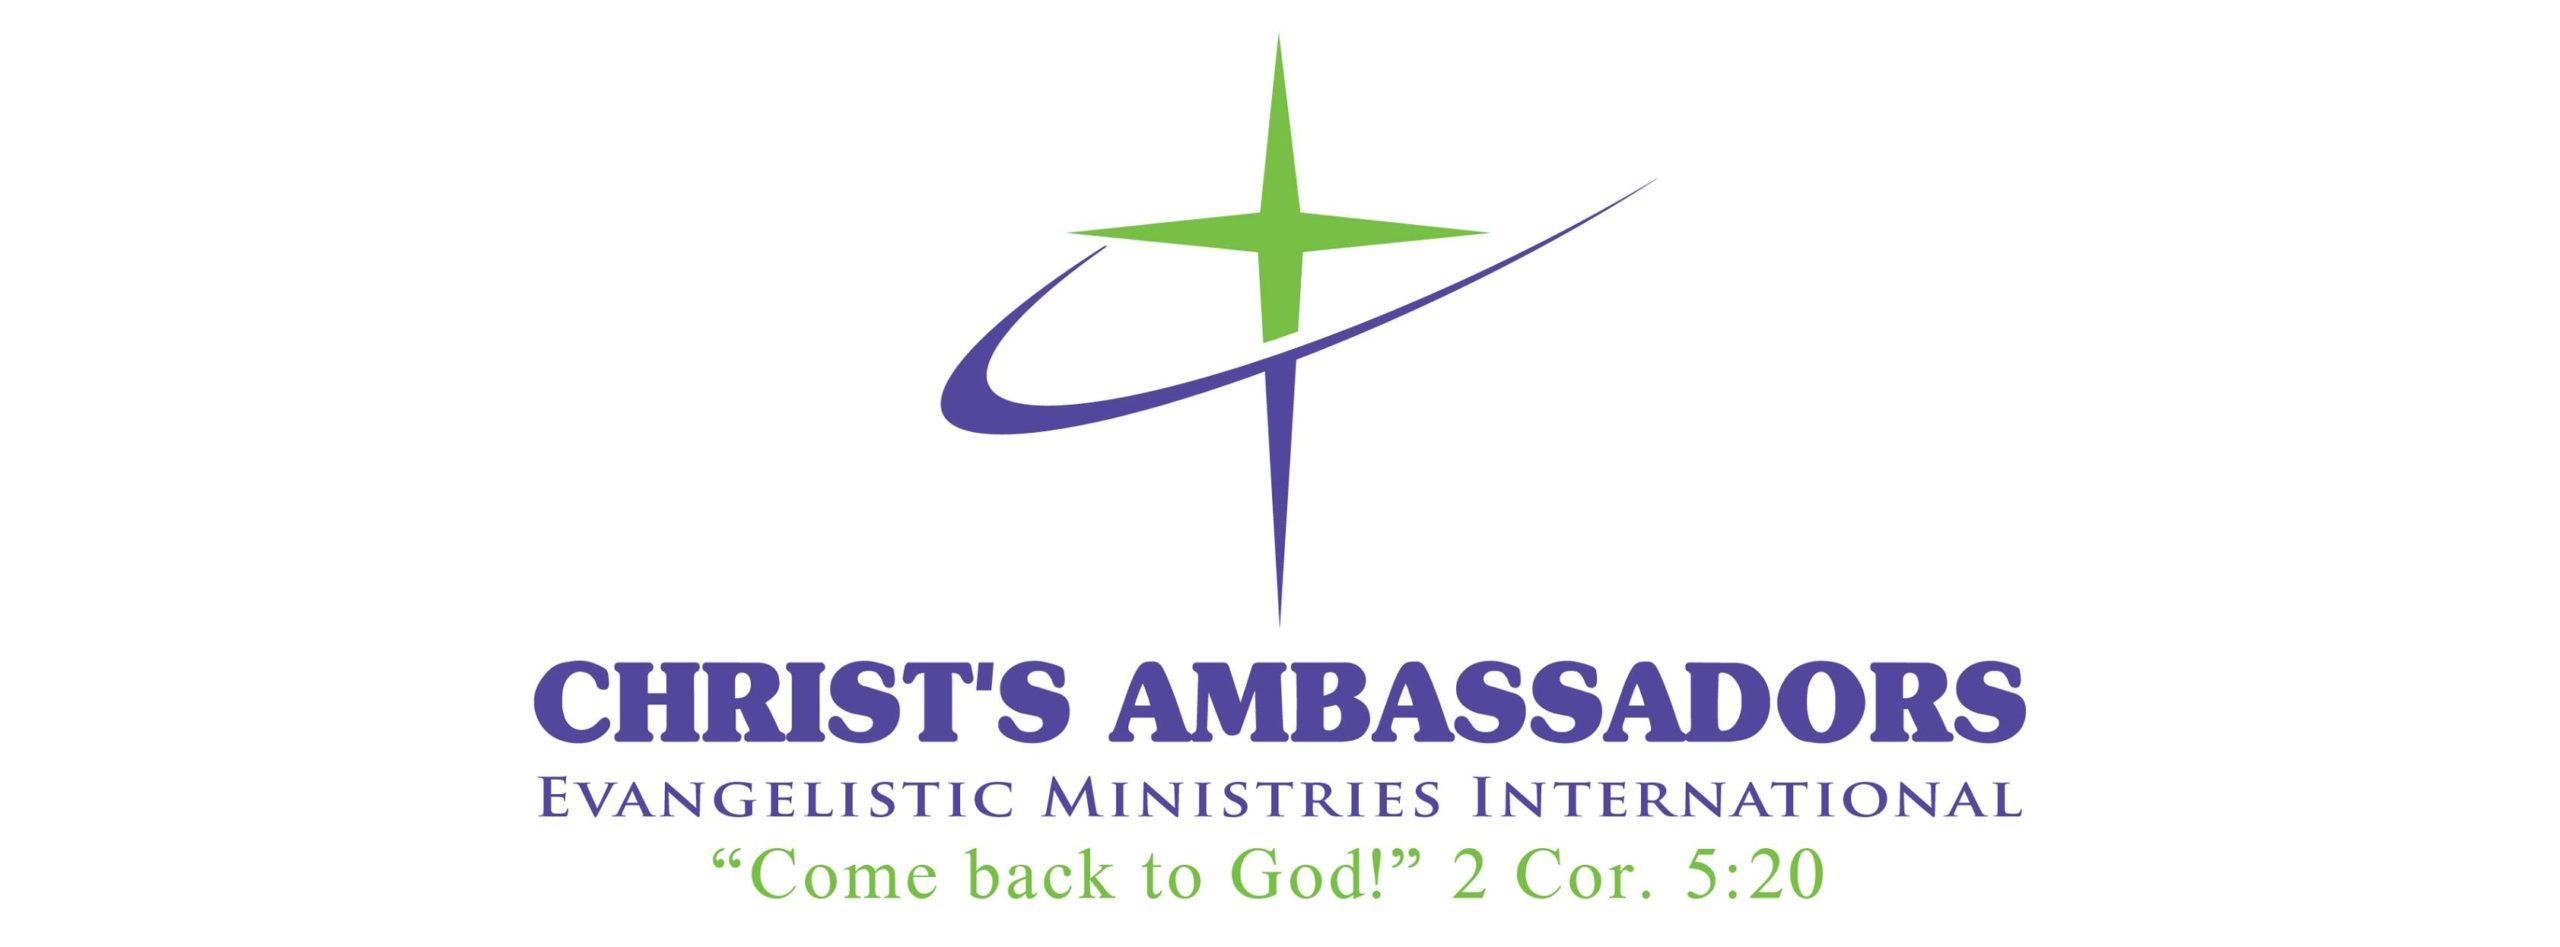 CHRIST'S AMBASSADORS Evangelistic Ministries International